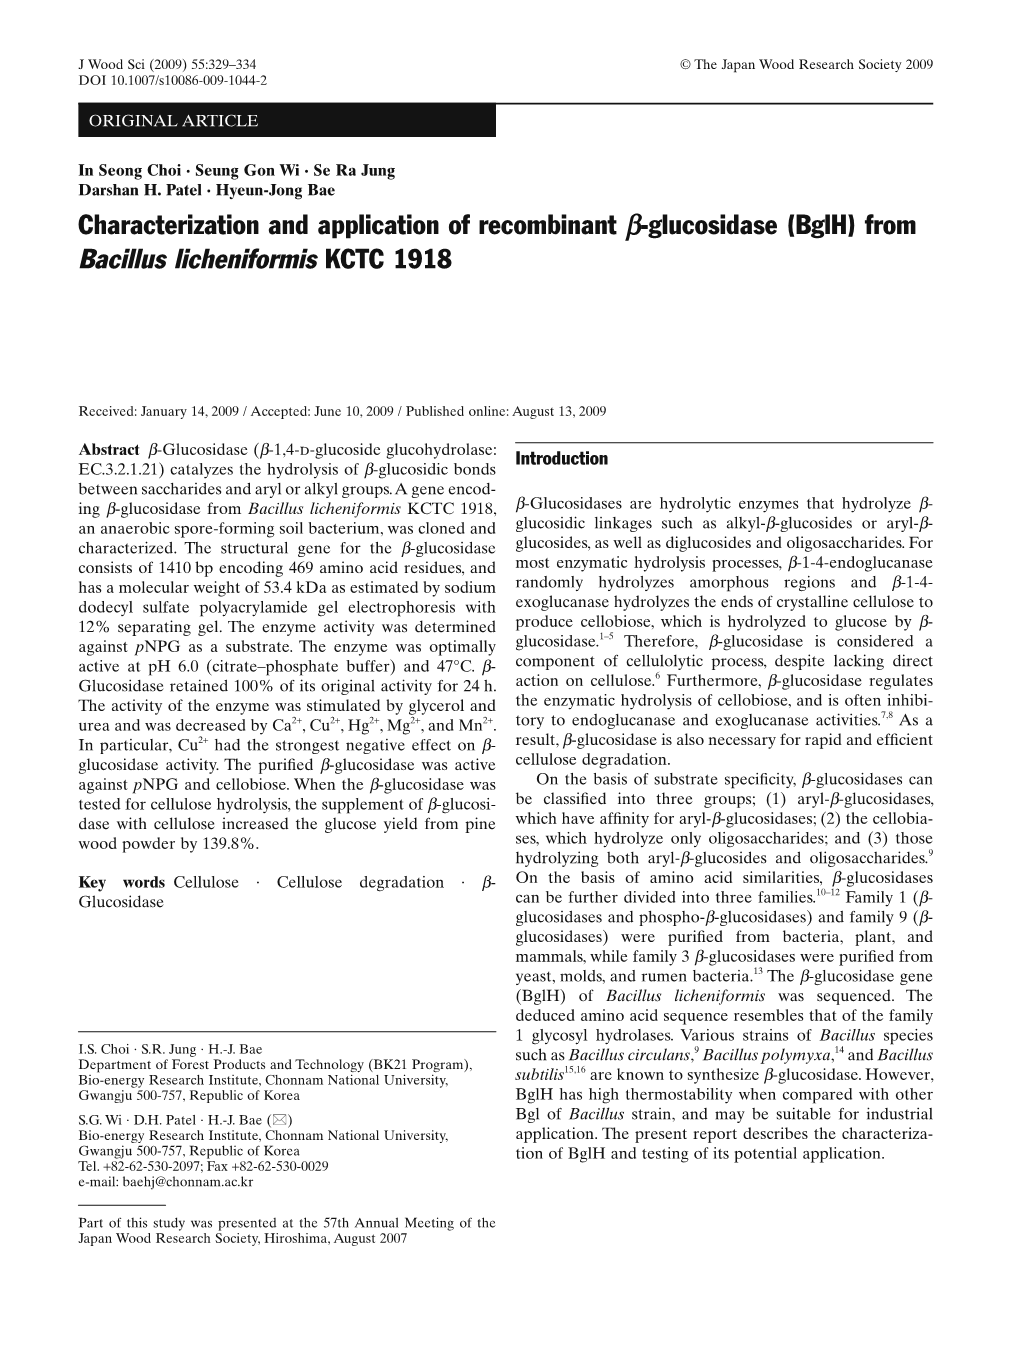 Characterization and Application of Recombinant Β-Glucosidase (Bglh) from Bacillus Licheniformis KCTC 1918